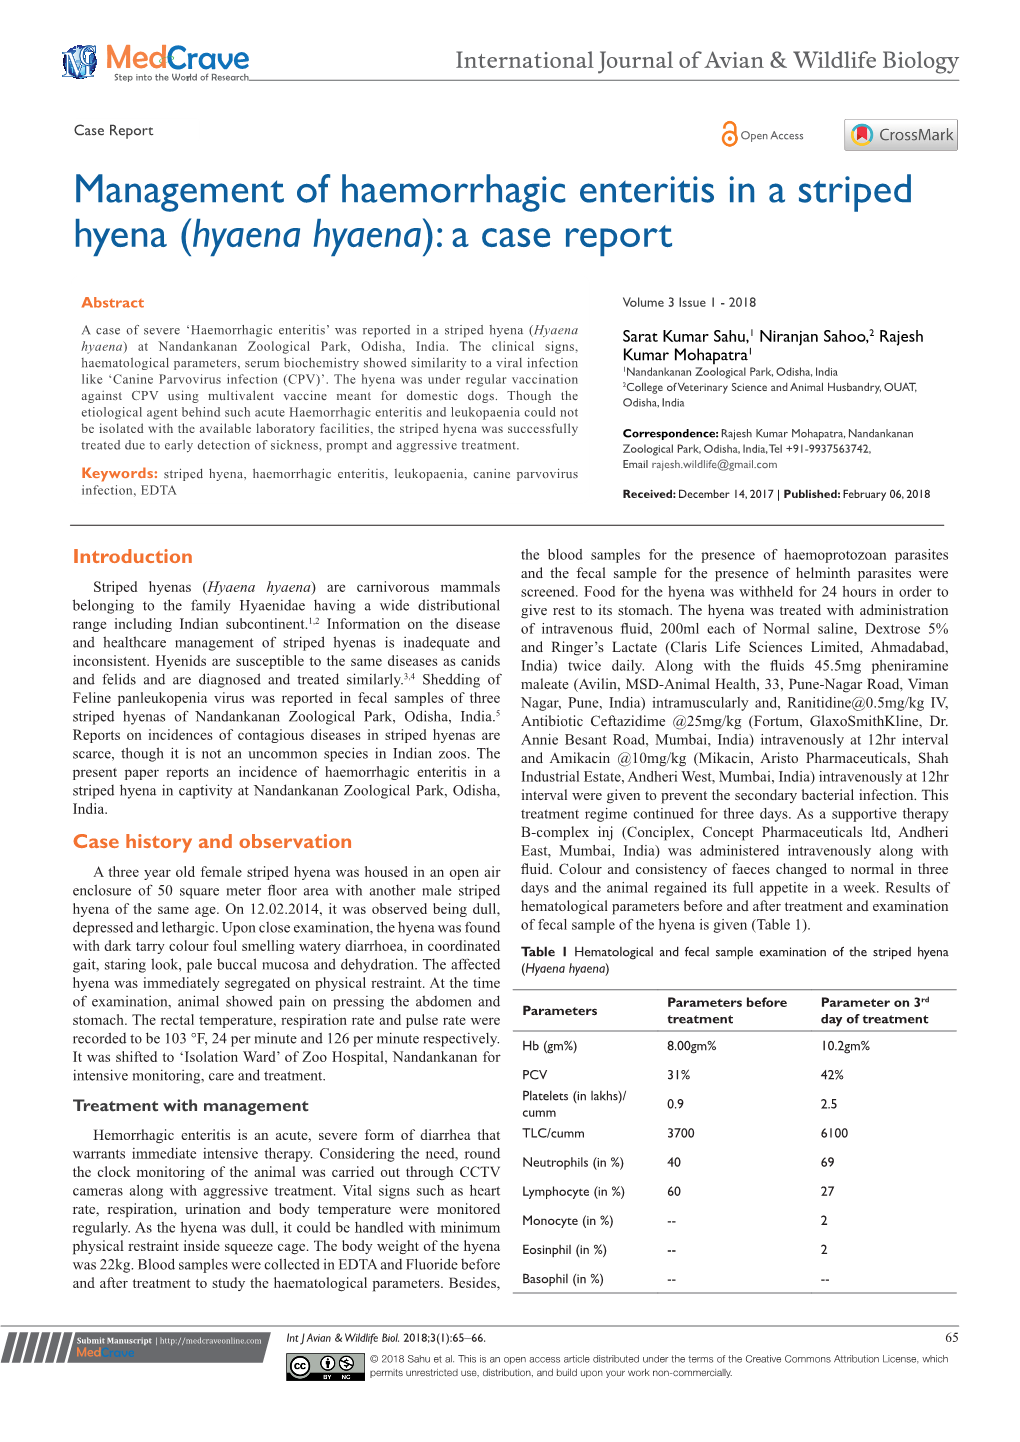 Management of Haemorrhagic Enteritis in a Striped Hyena (Hyaena Hyaena): a Case Report